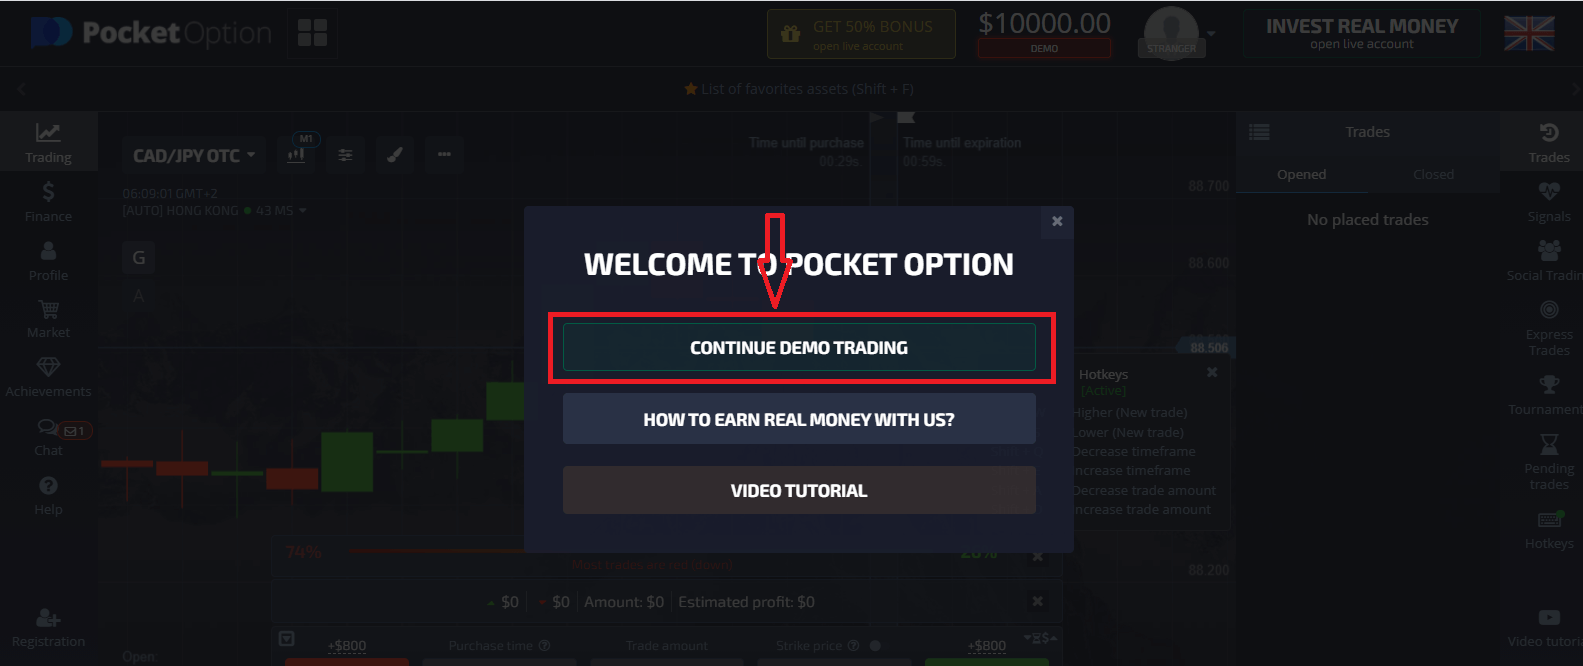 Come registrarsi e prelevare denaro su Pocket Option